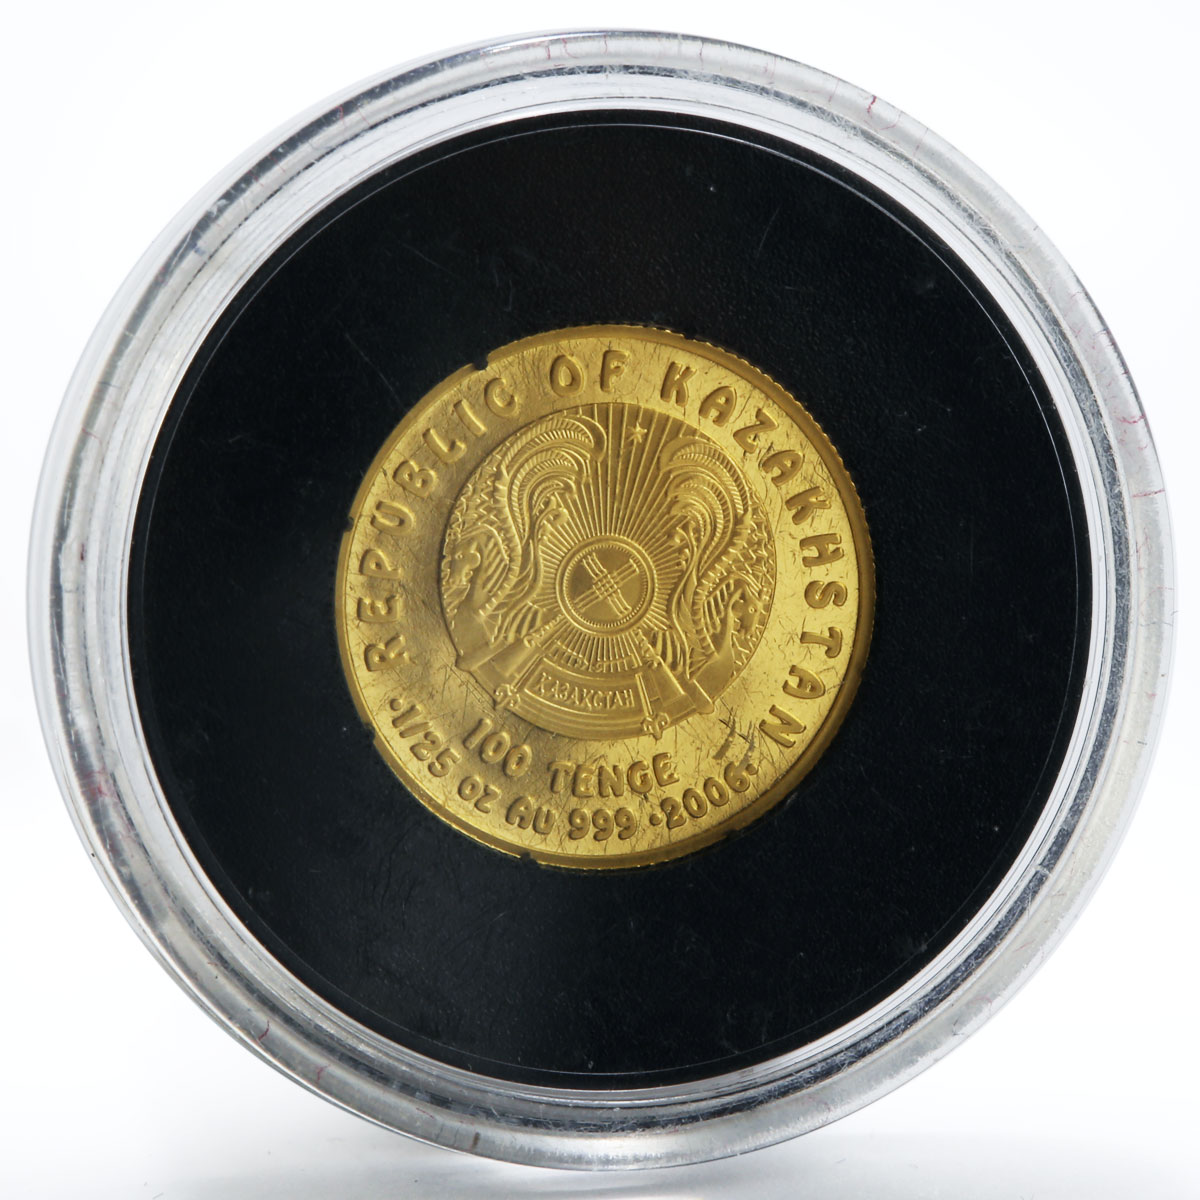 Kazakhstan 100 tenge Eagle – Headed Griffin Mythology gold proof coin 2006